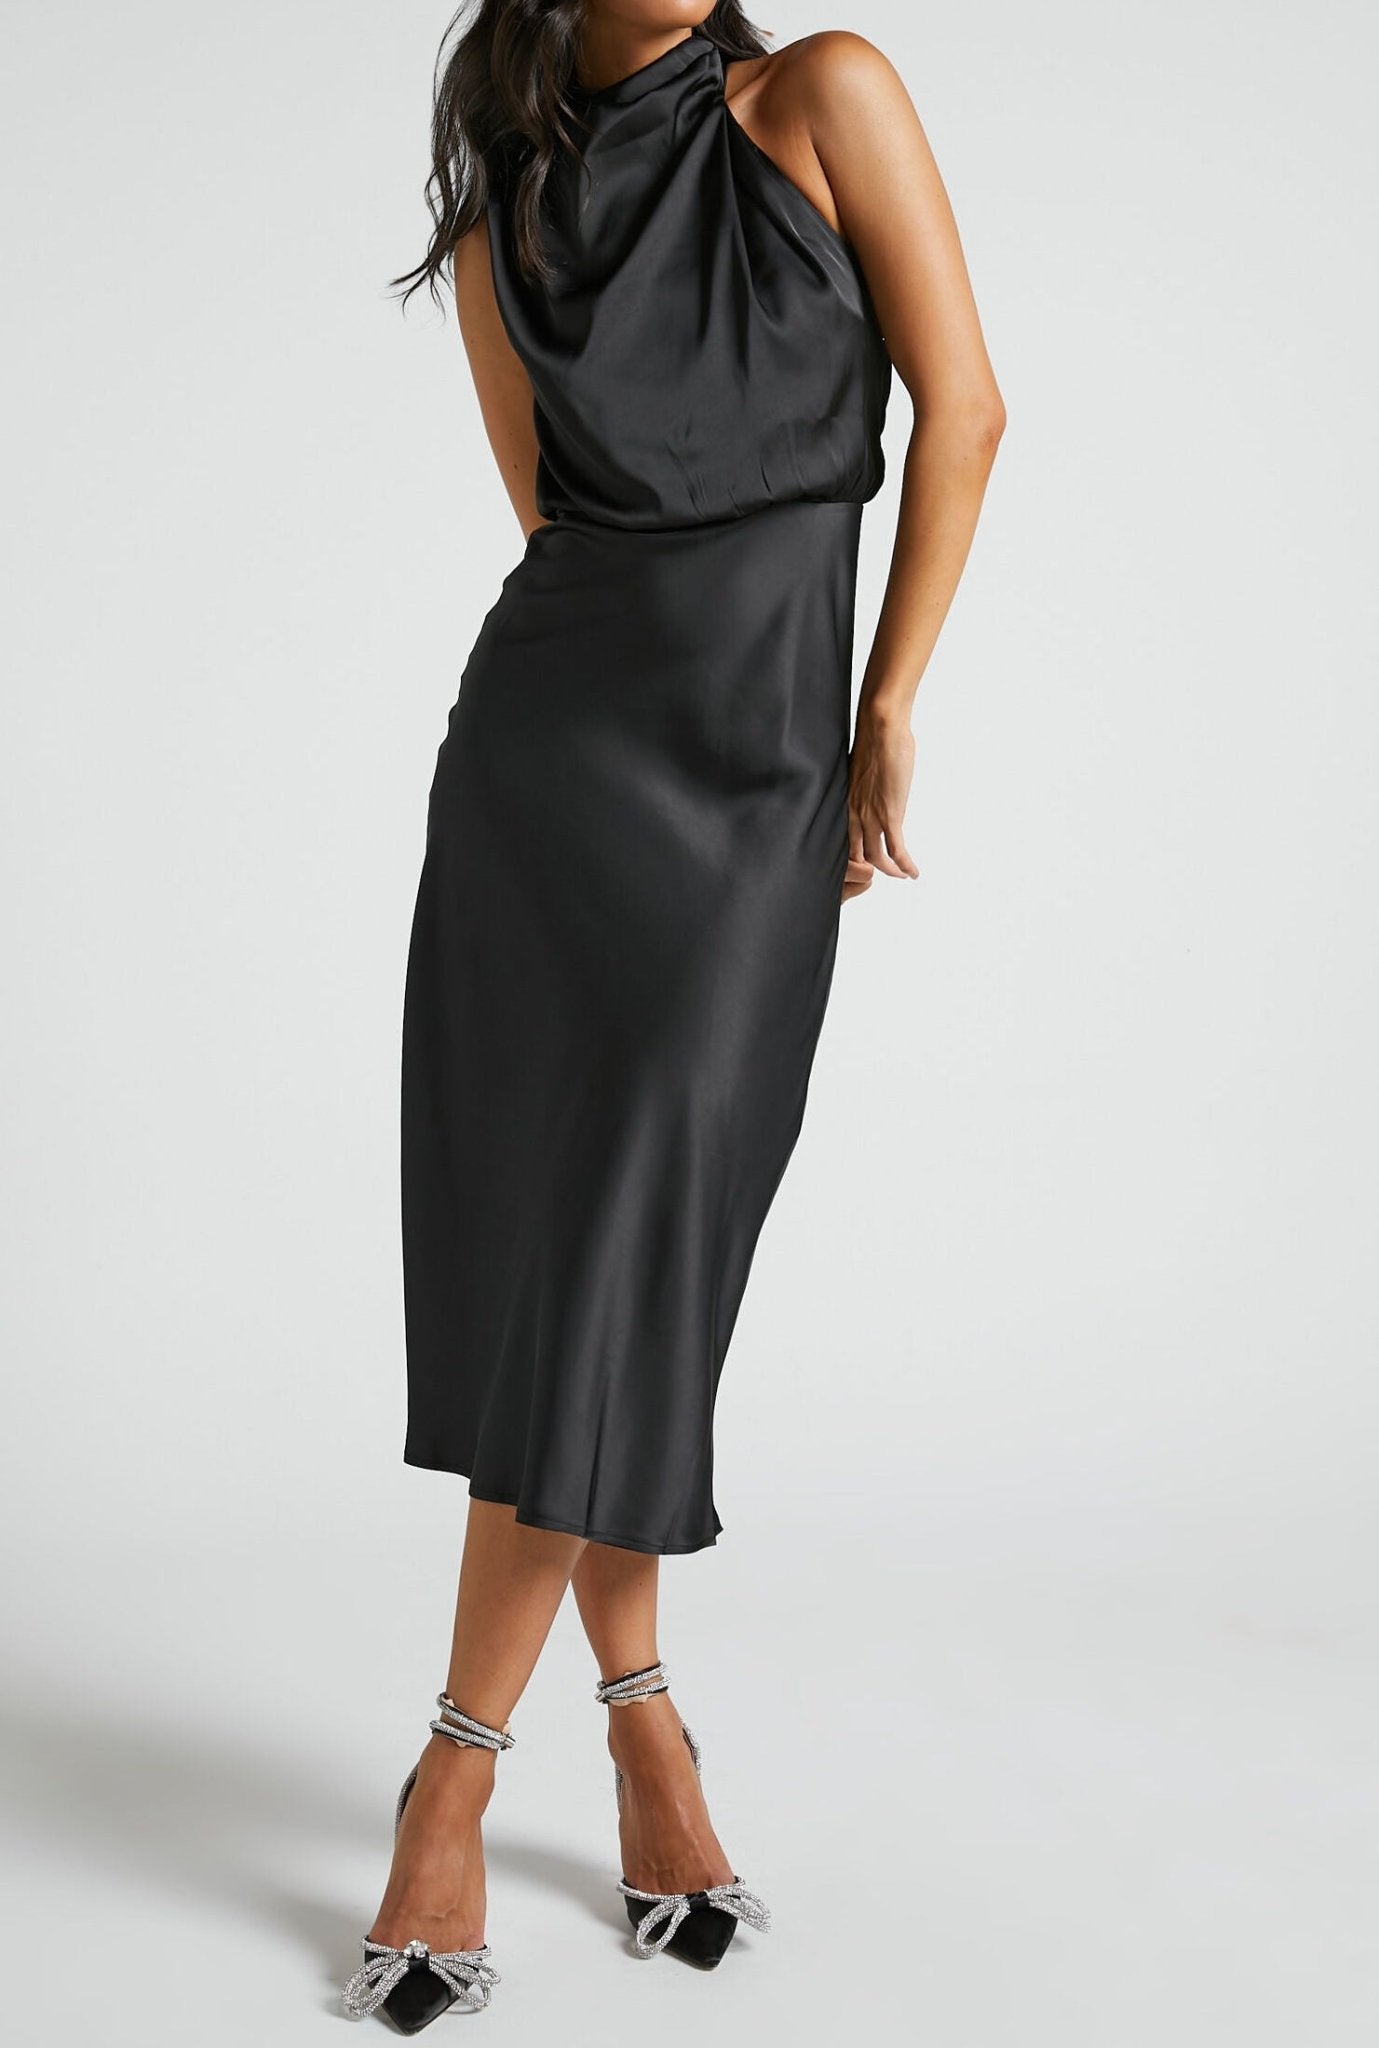 Eiza - negro - Cindel vestidos maxi, midi, mini, para toda ocasion, largos, de fiesta, de boda